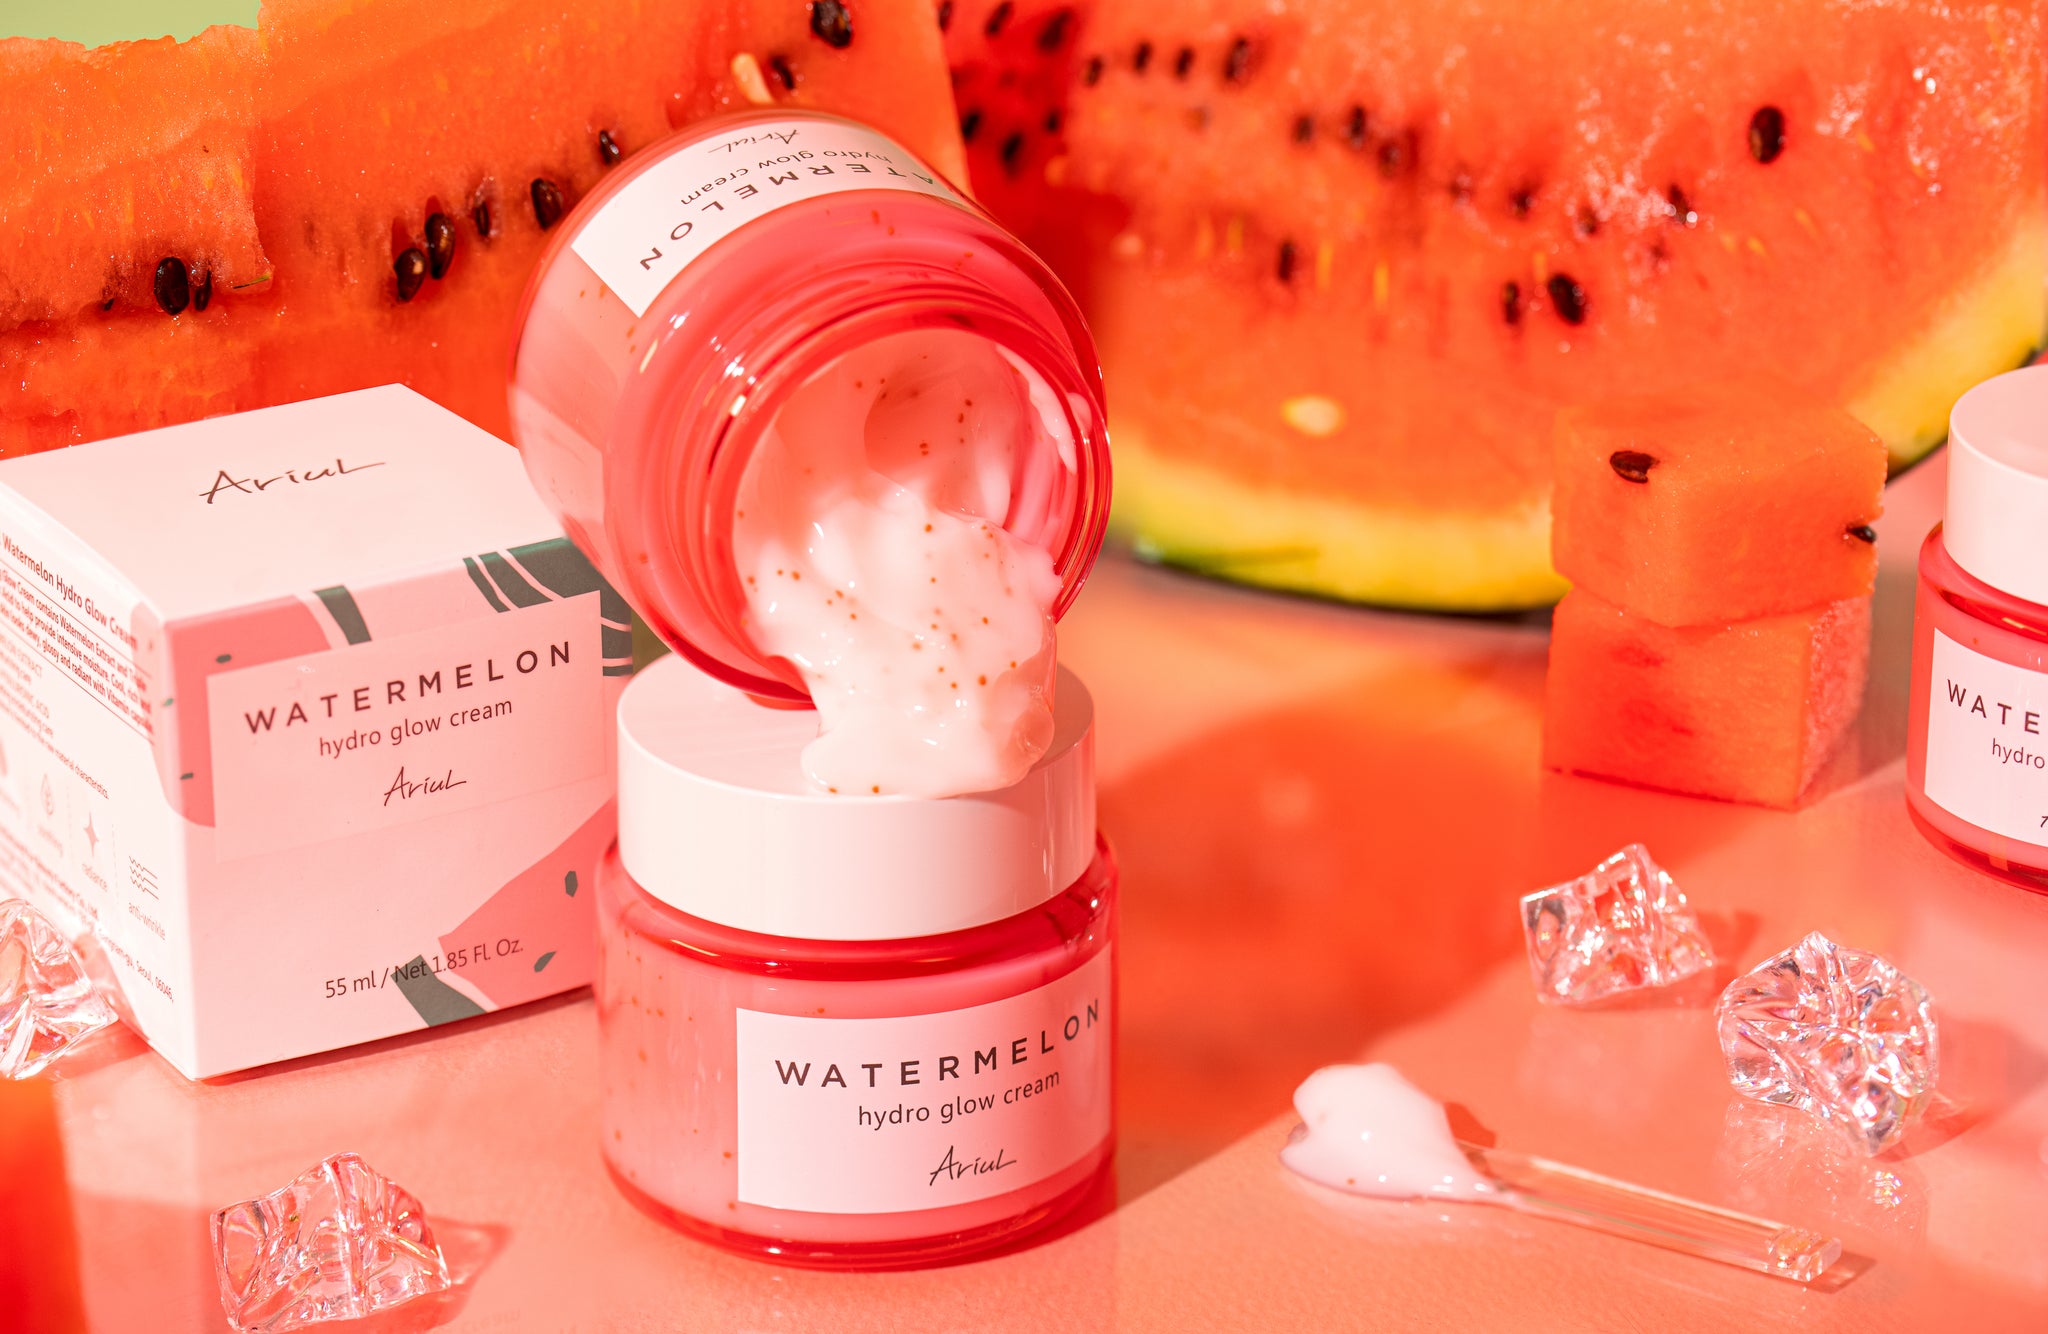 Ariul Watermelon Hydro Glow Cream